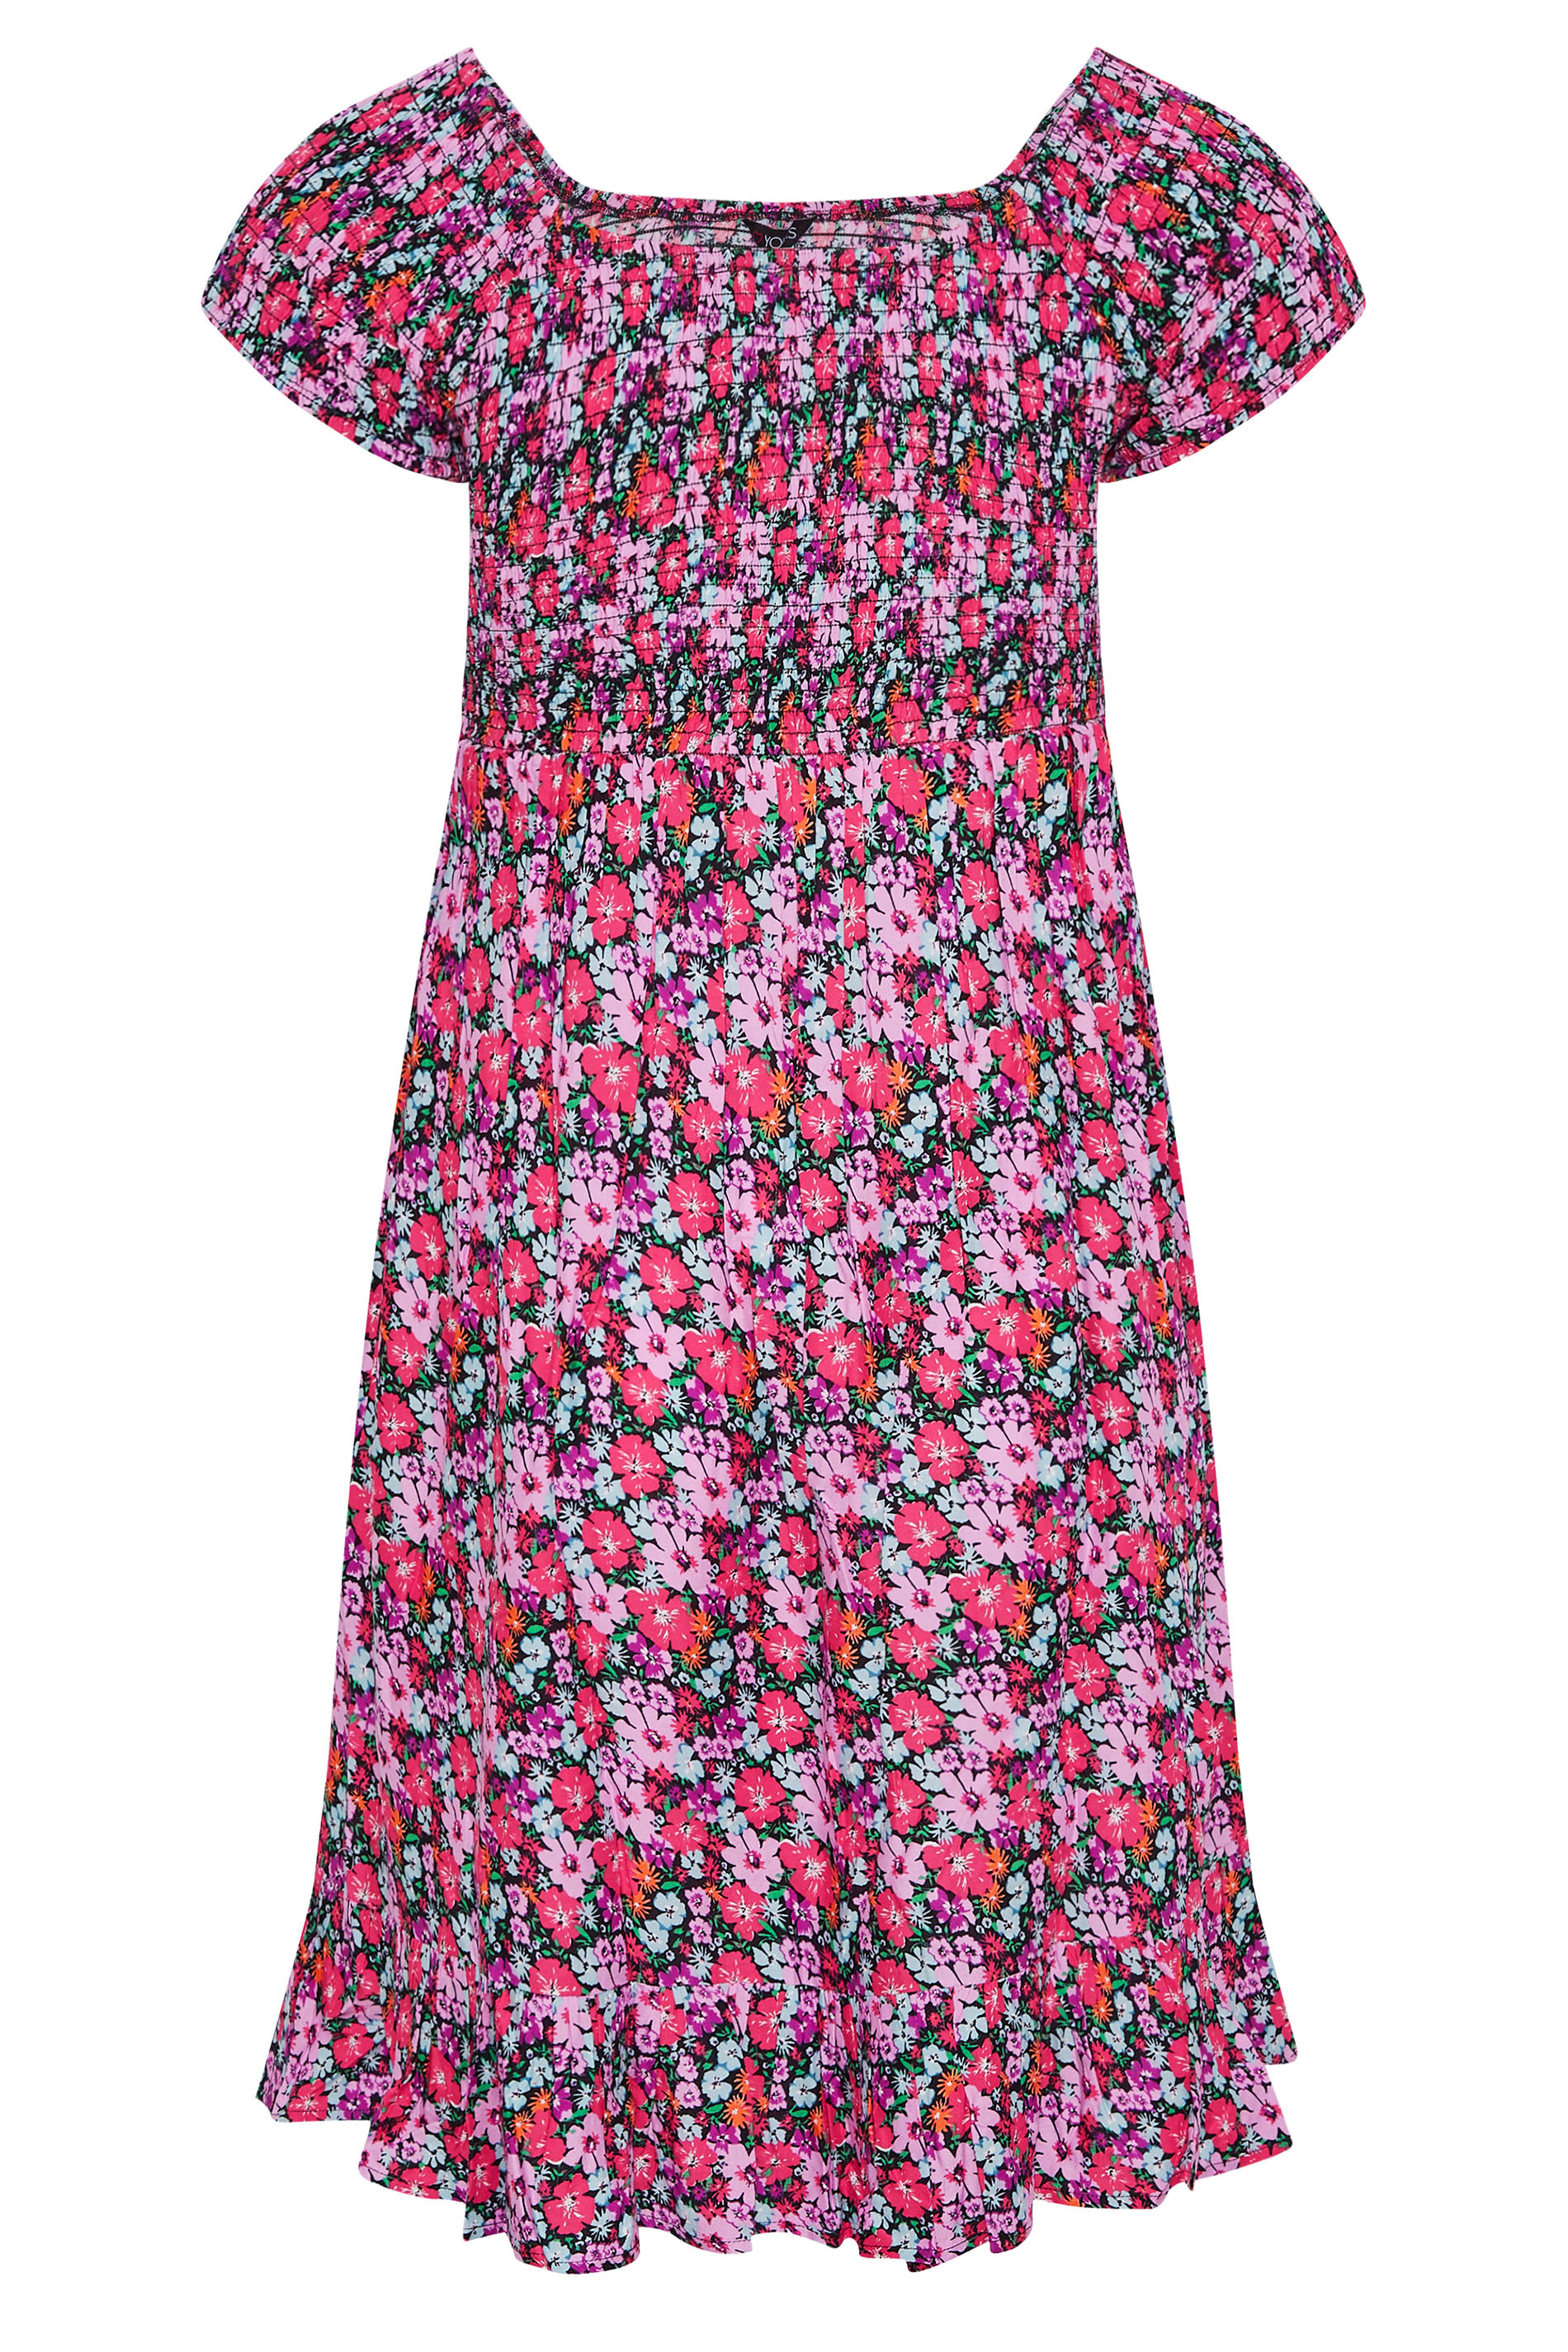 Robes Grande Taille Grande taille  Robes Mi-Longue | Robe Crayon Rose Floral Encolure Bardot - GS59827